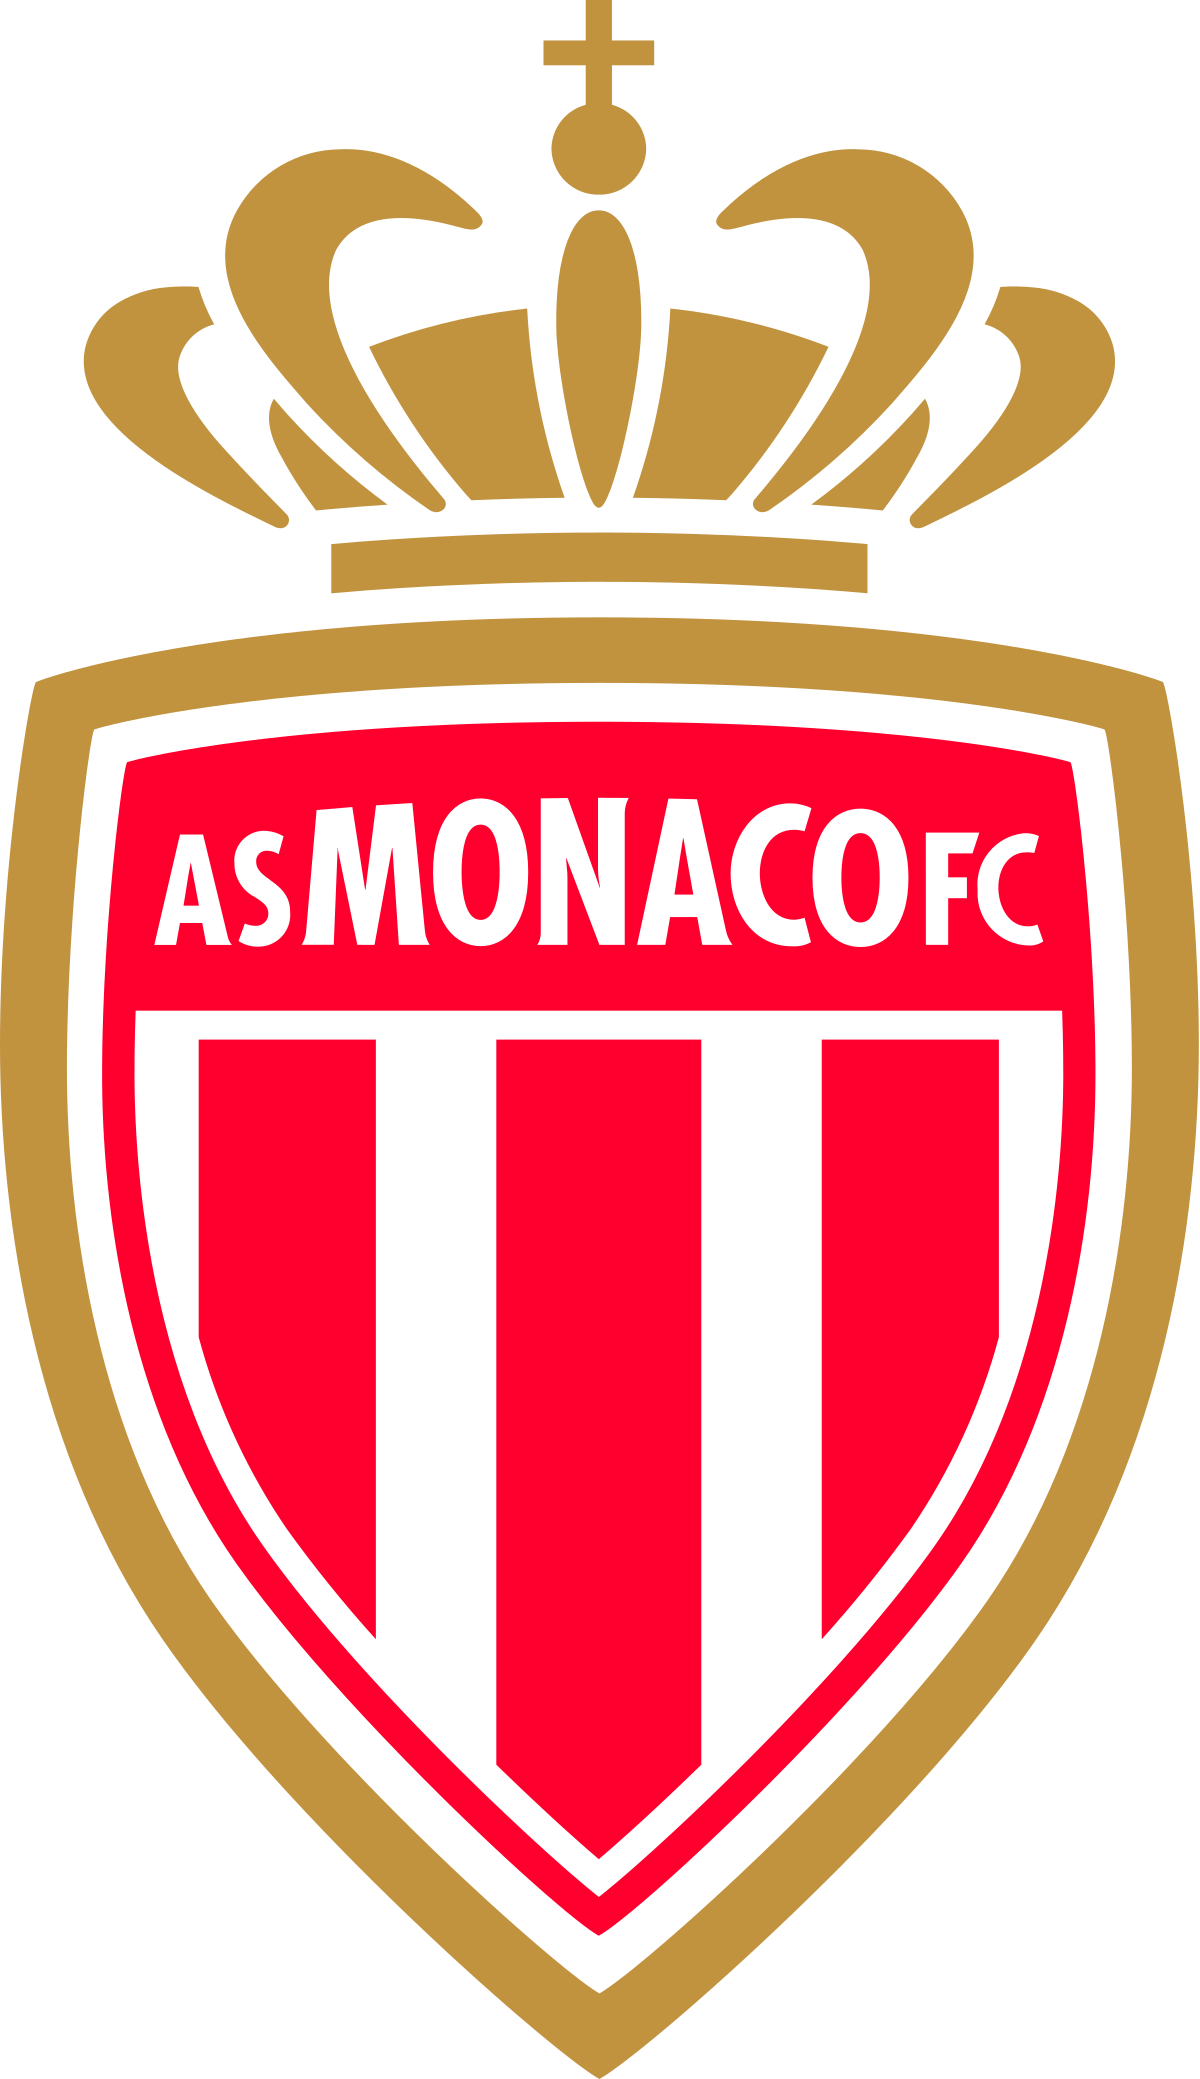 AS MONACO FC : Brand Short Description Type Here.